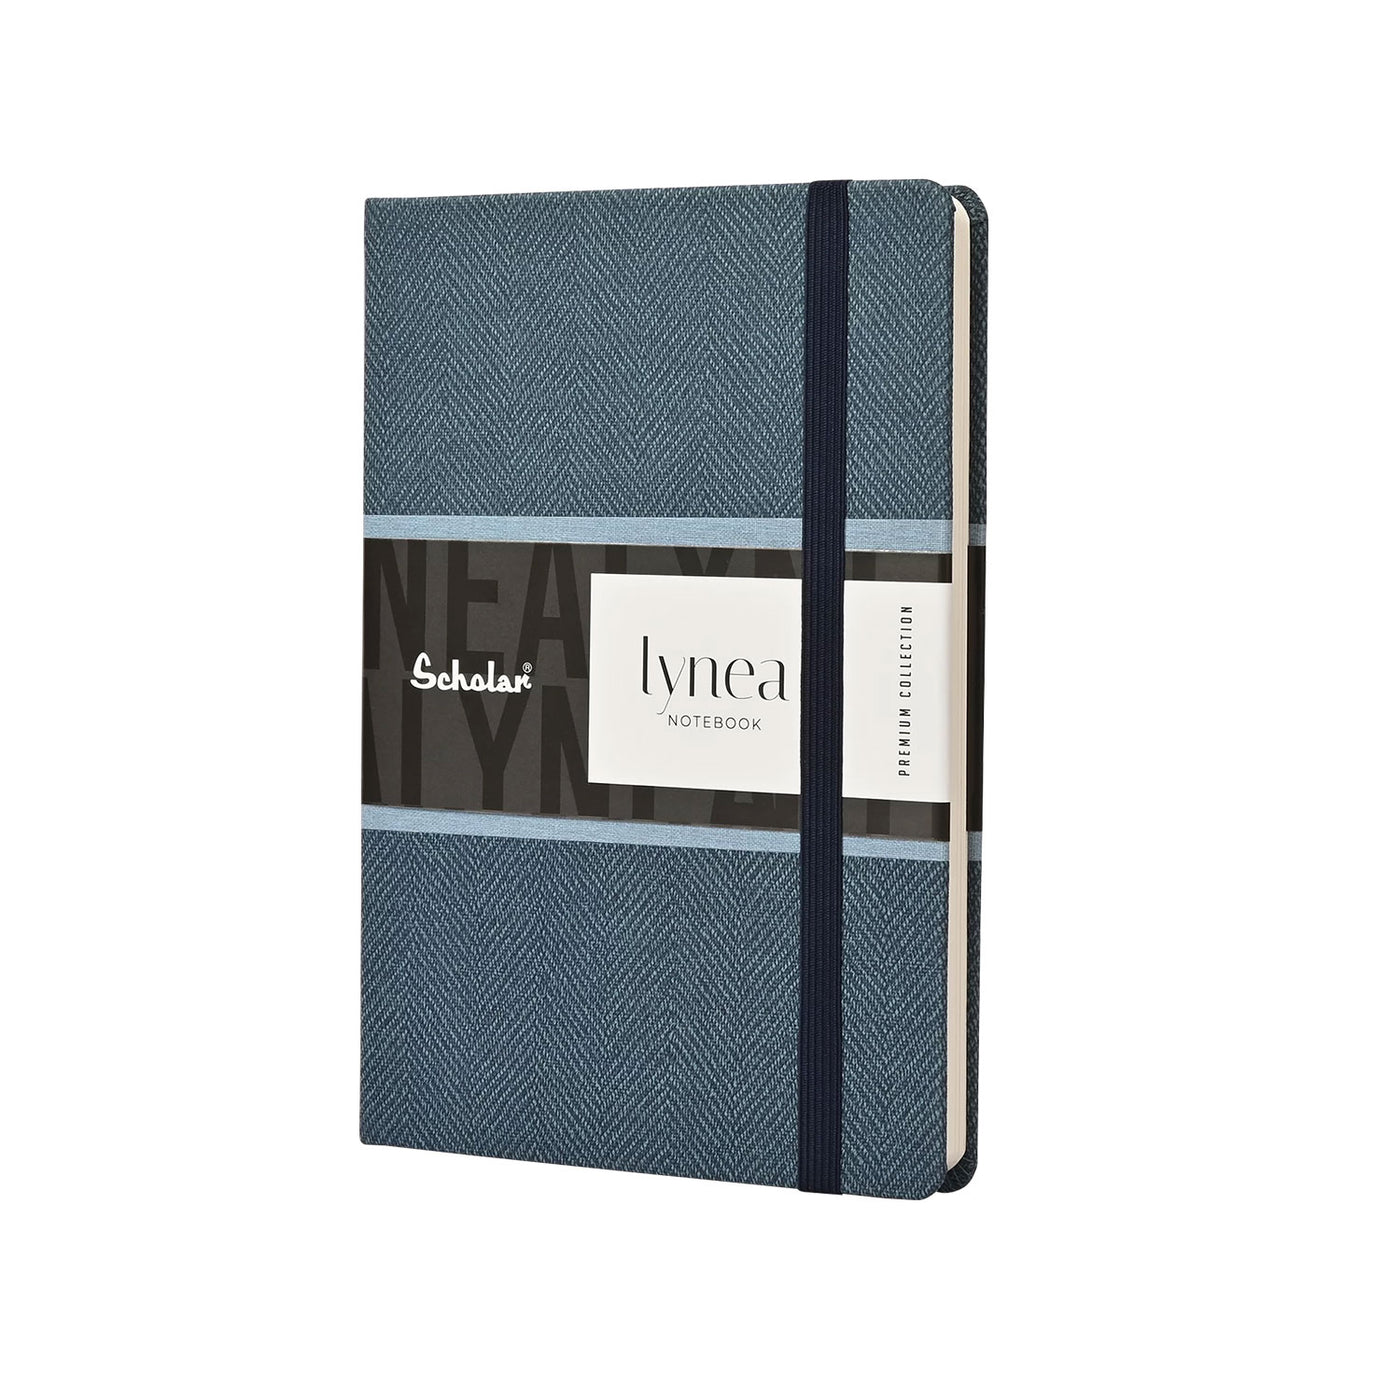 Scholar Lynea Blue Notebook - A5 Ruled 2